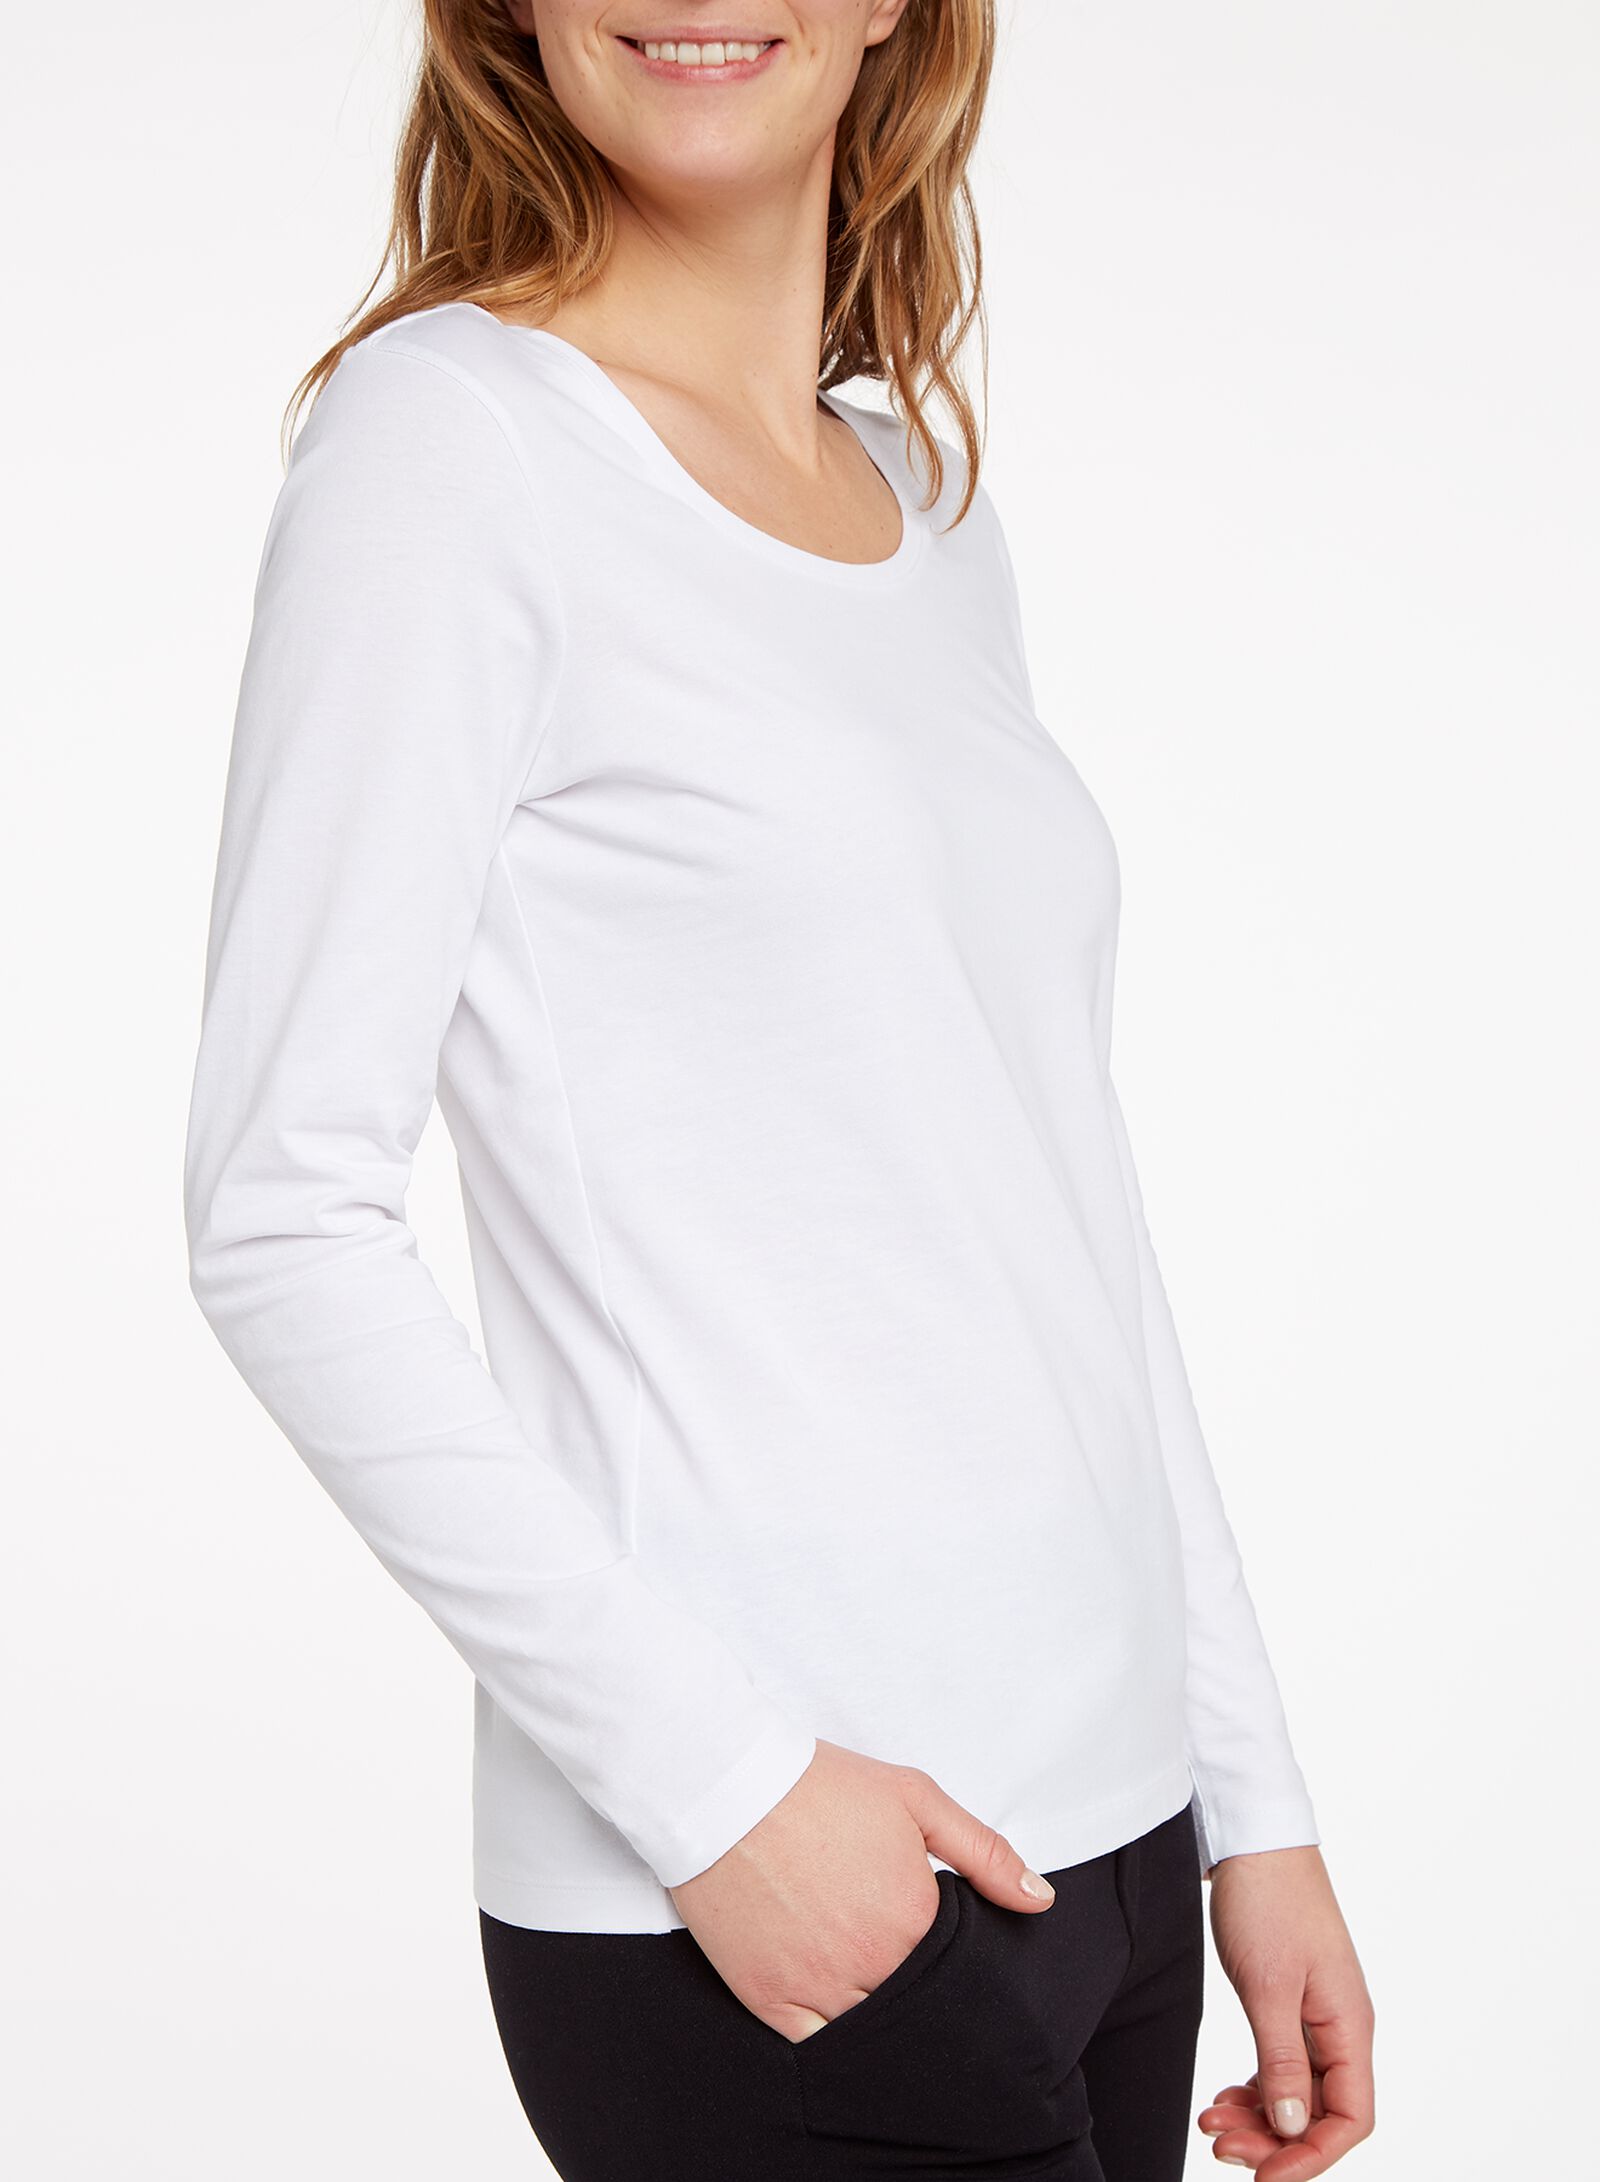 t-shirt femme classique blanc blanc - 1000005478 - HEMA